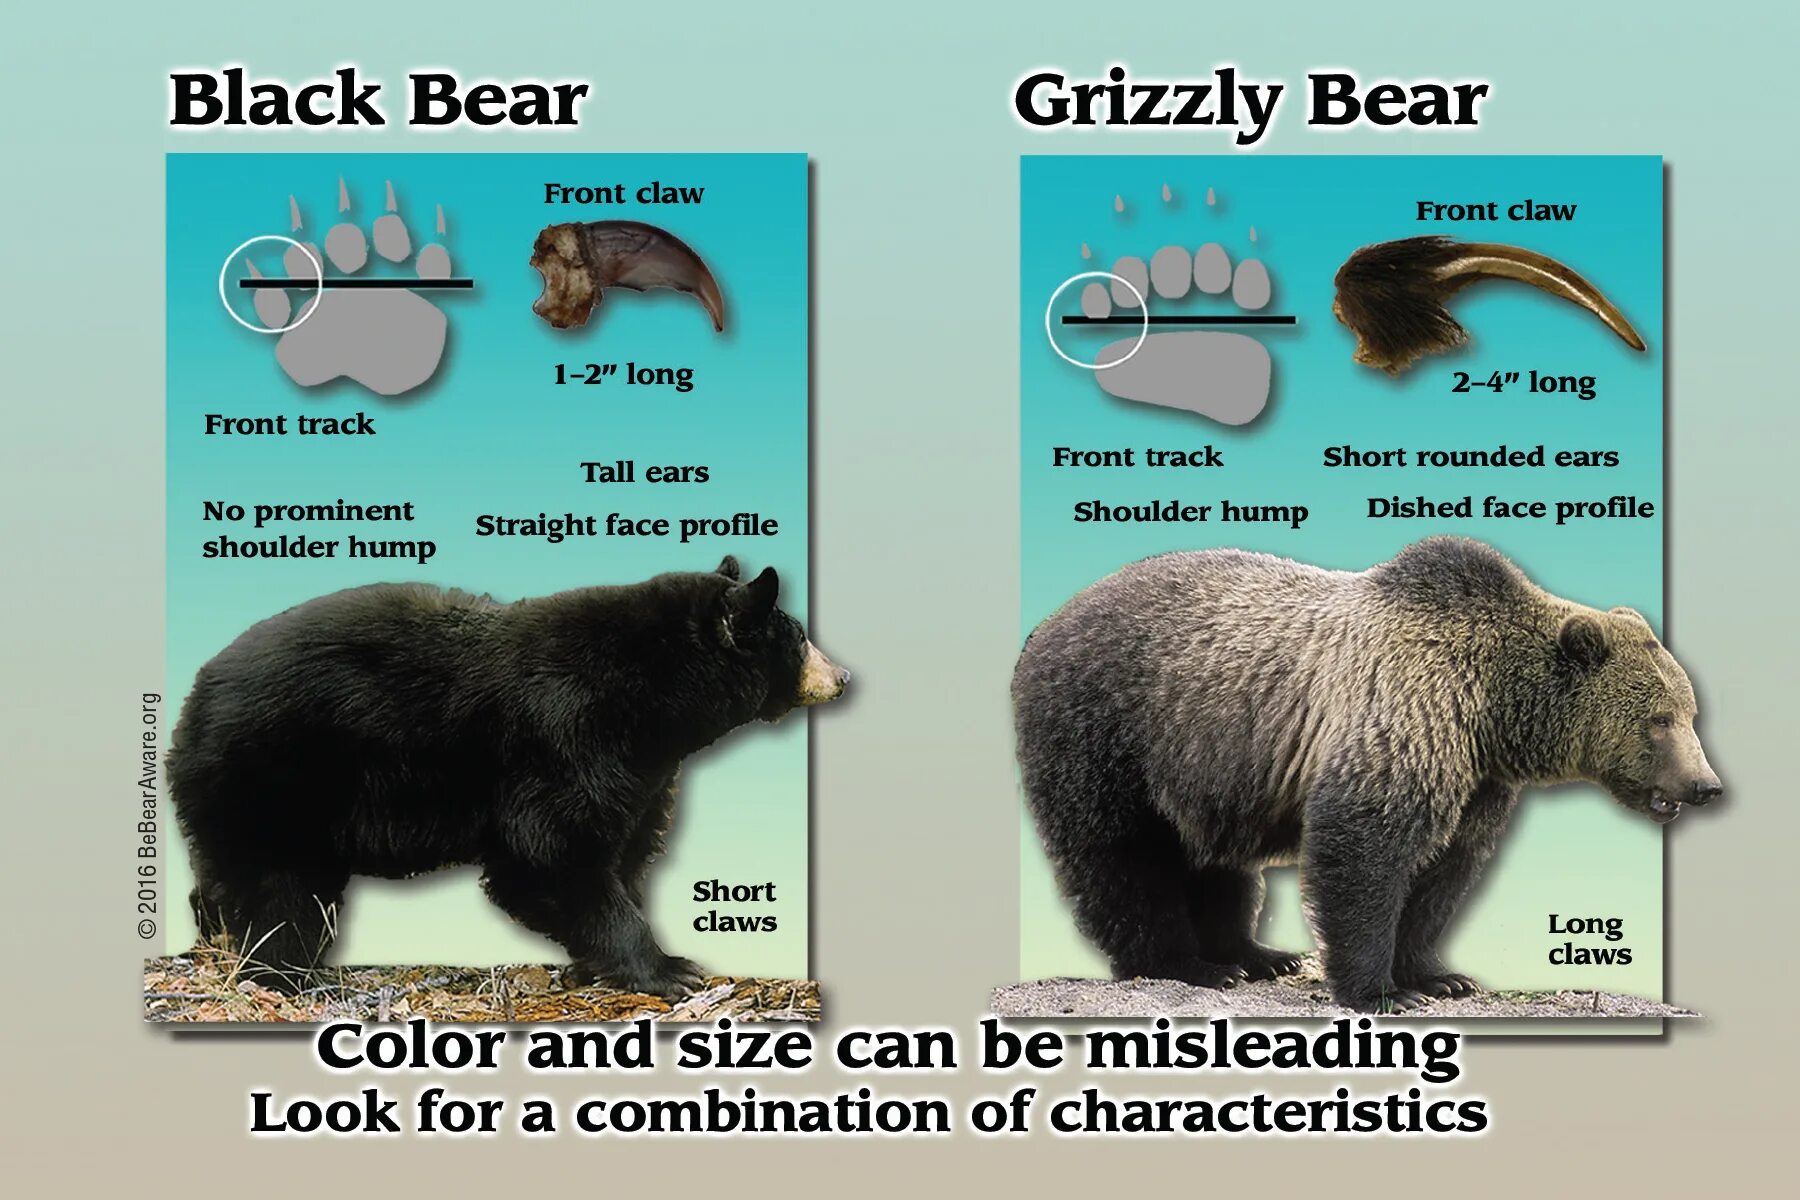 На каких обитают медведи гризли. Медведь Гризли и бурый разница. Гризли и бурый медведь отличия. Разница между Гризли и бурым медведем. Гризли и бурый сравнение.